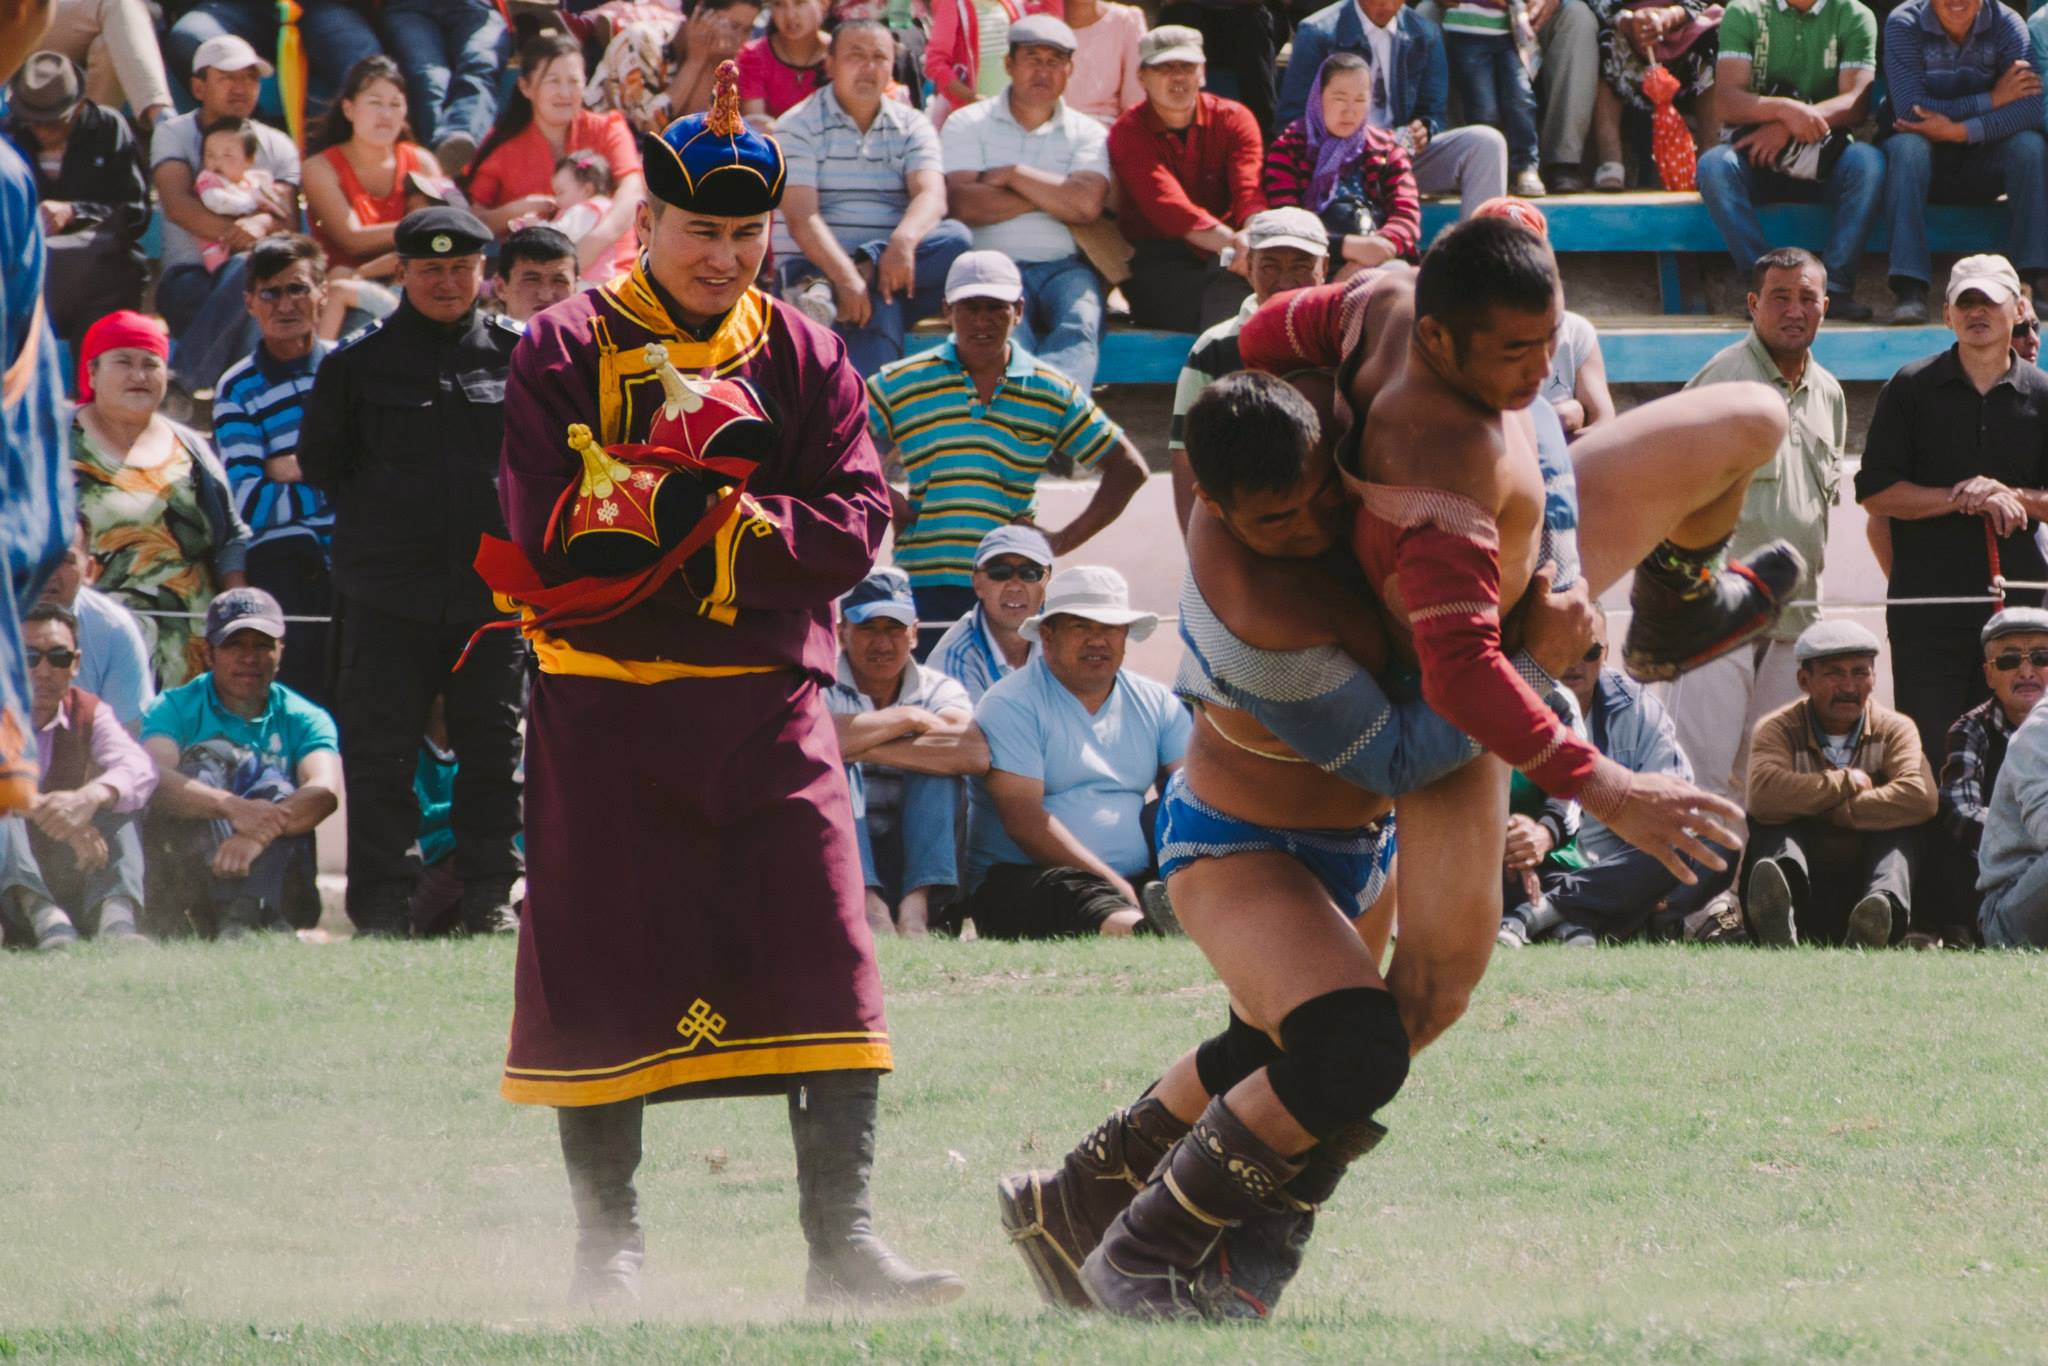 Naadam festival in Mongolia